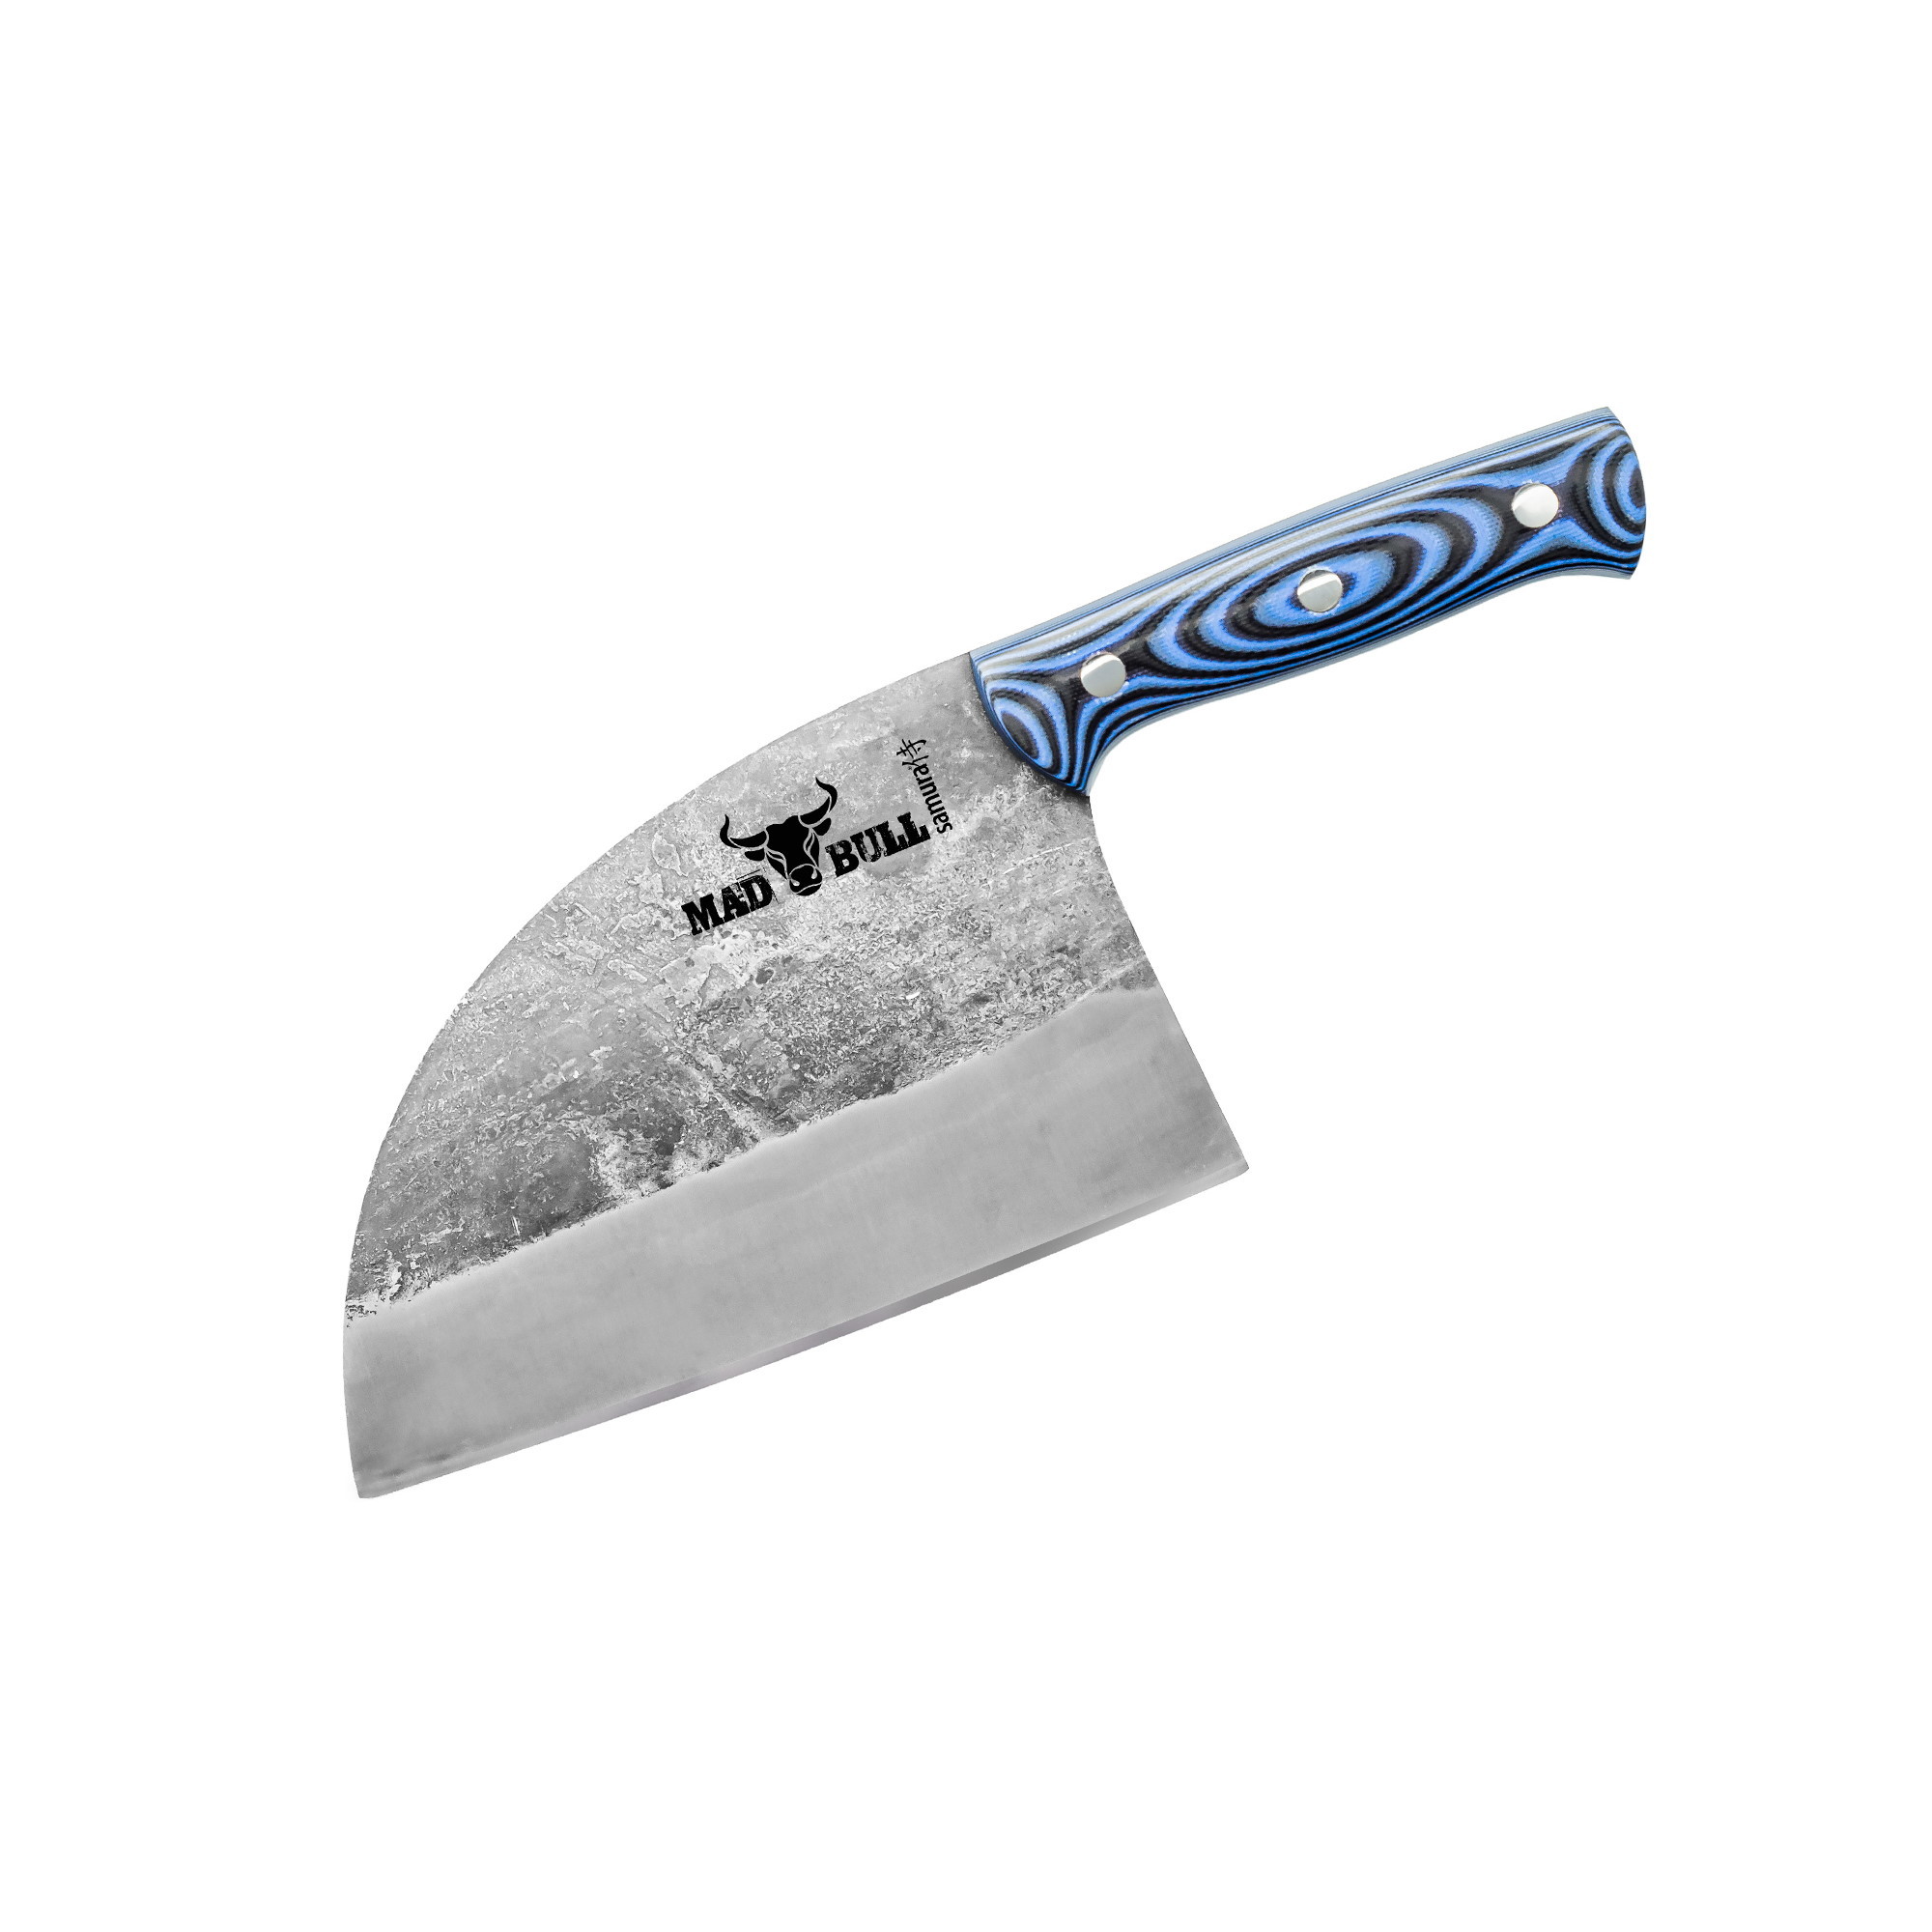 Сербский нож (топорик) Samura MAD BULL, сталь AUS-8, рукоять G10 шабер двусторонний лопатка вогнутая топорик 9 см серебристый